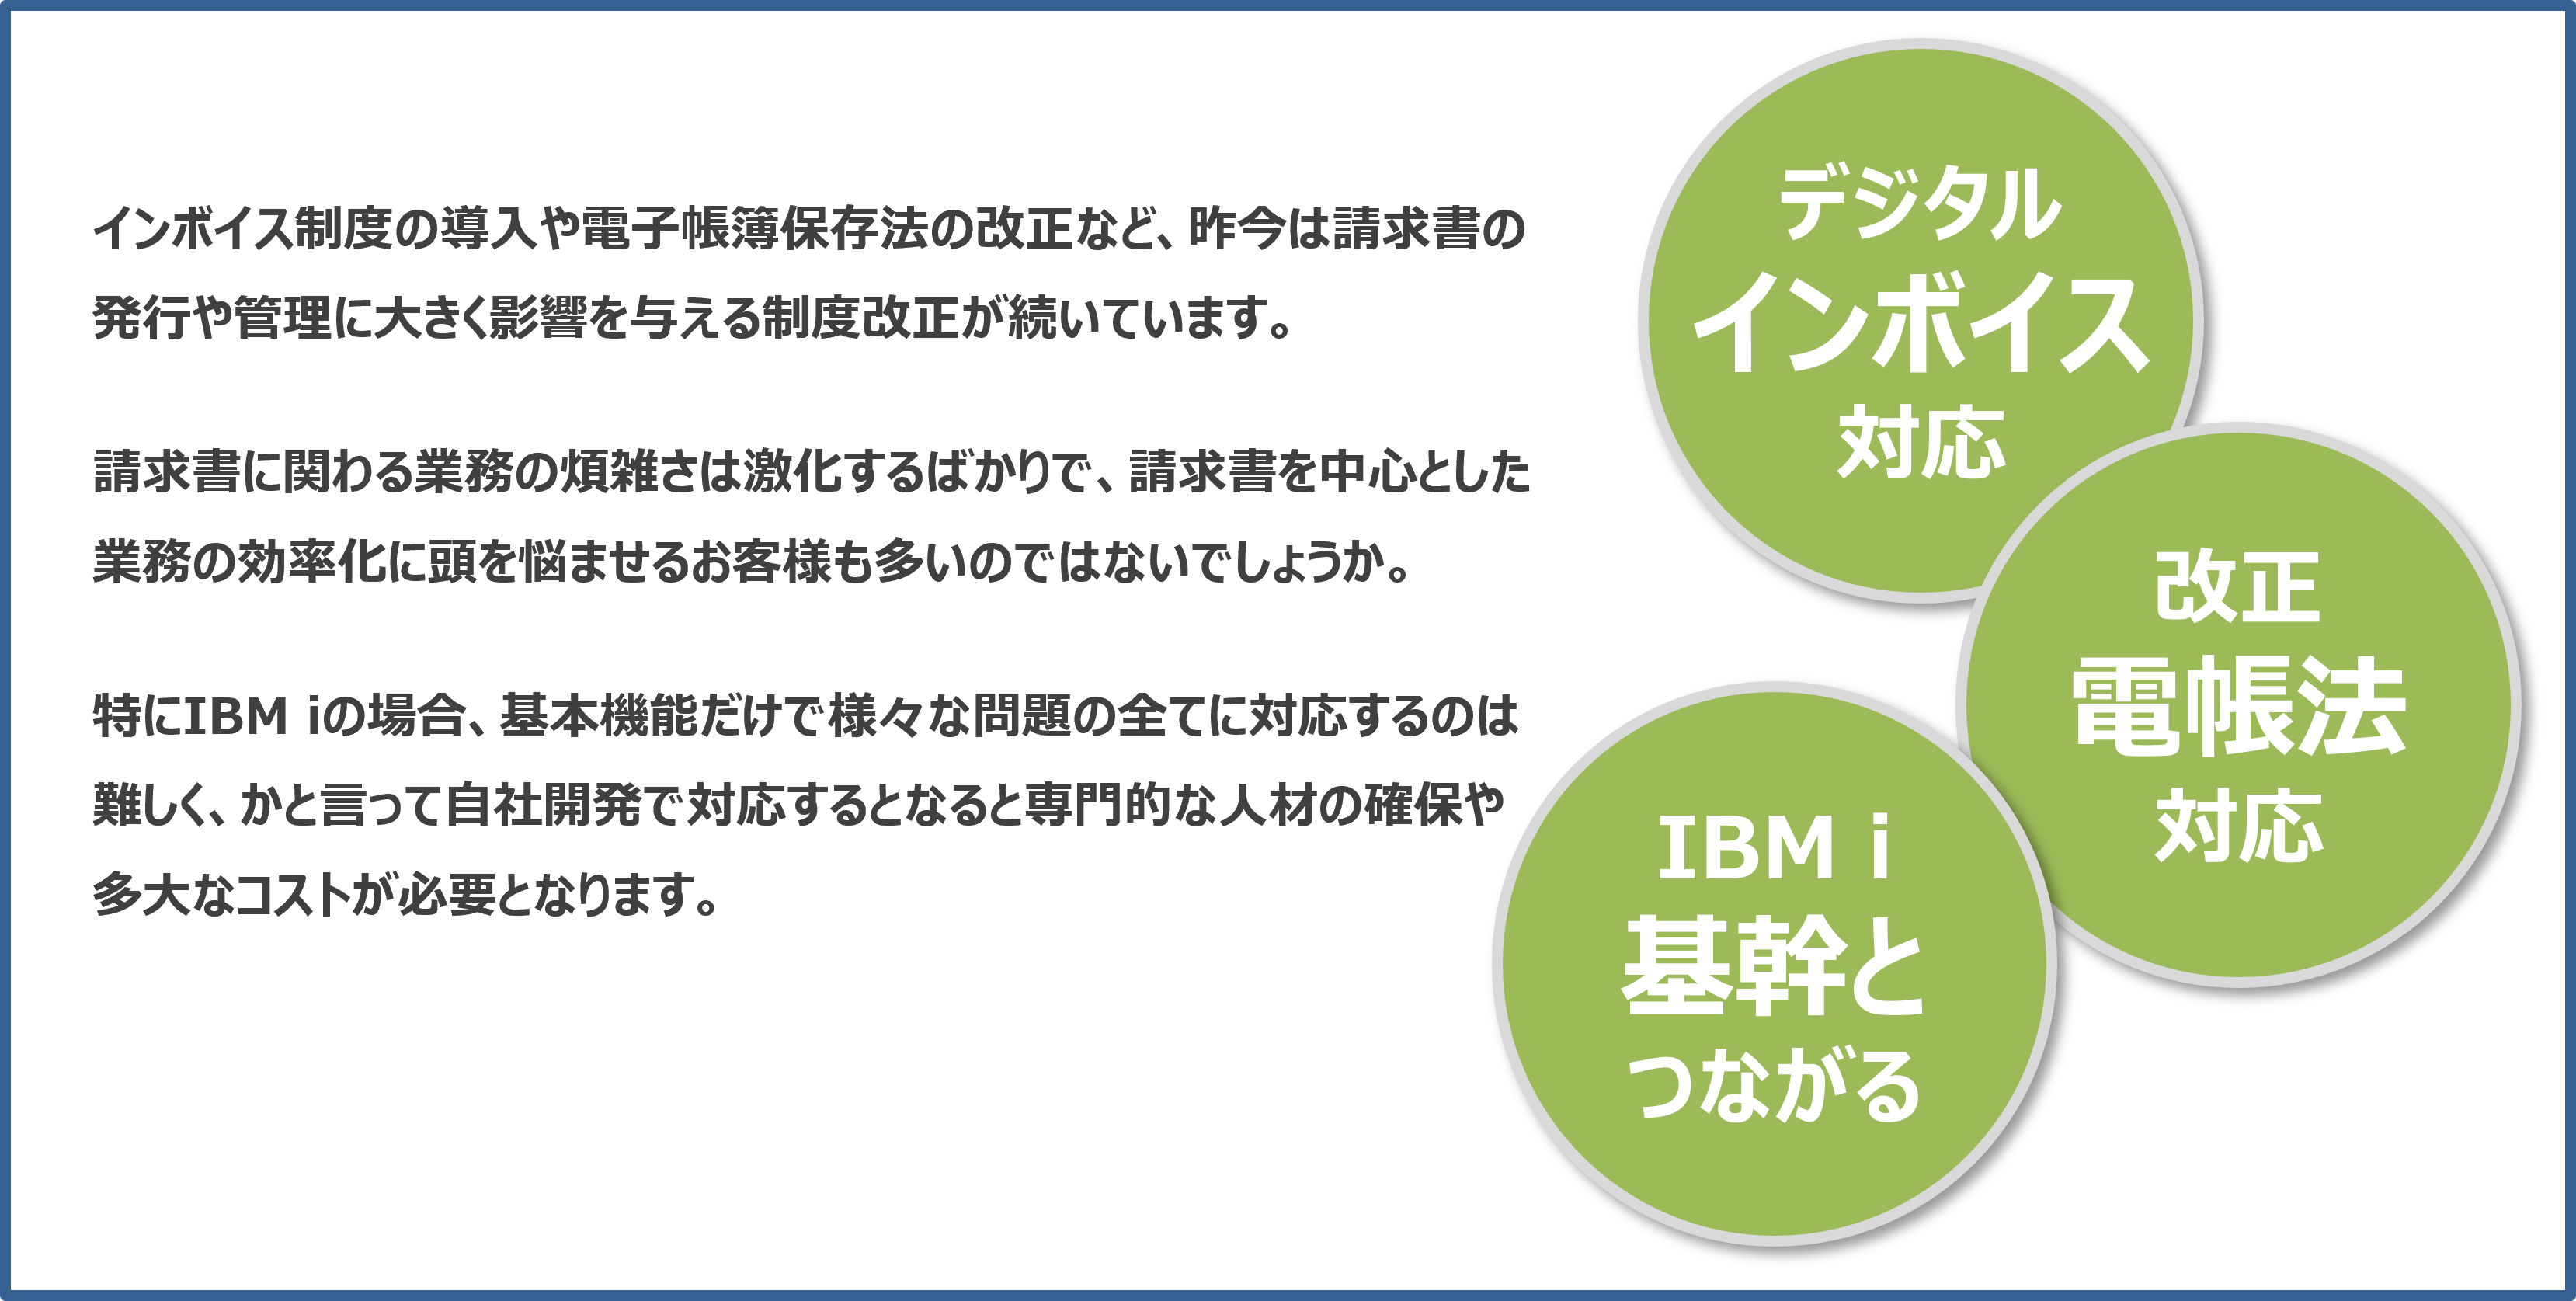 IBM iユーザーでも請求管理を電子化したい！